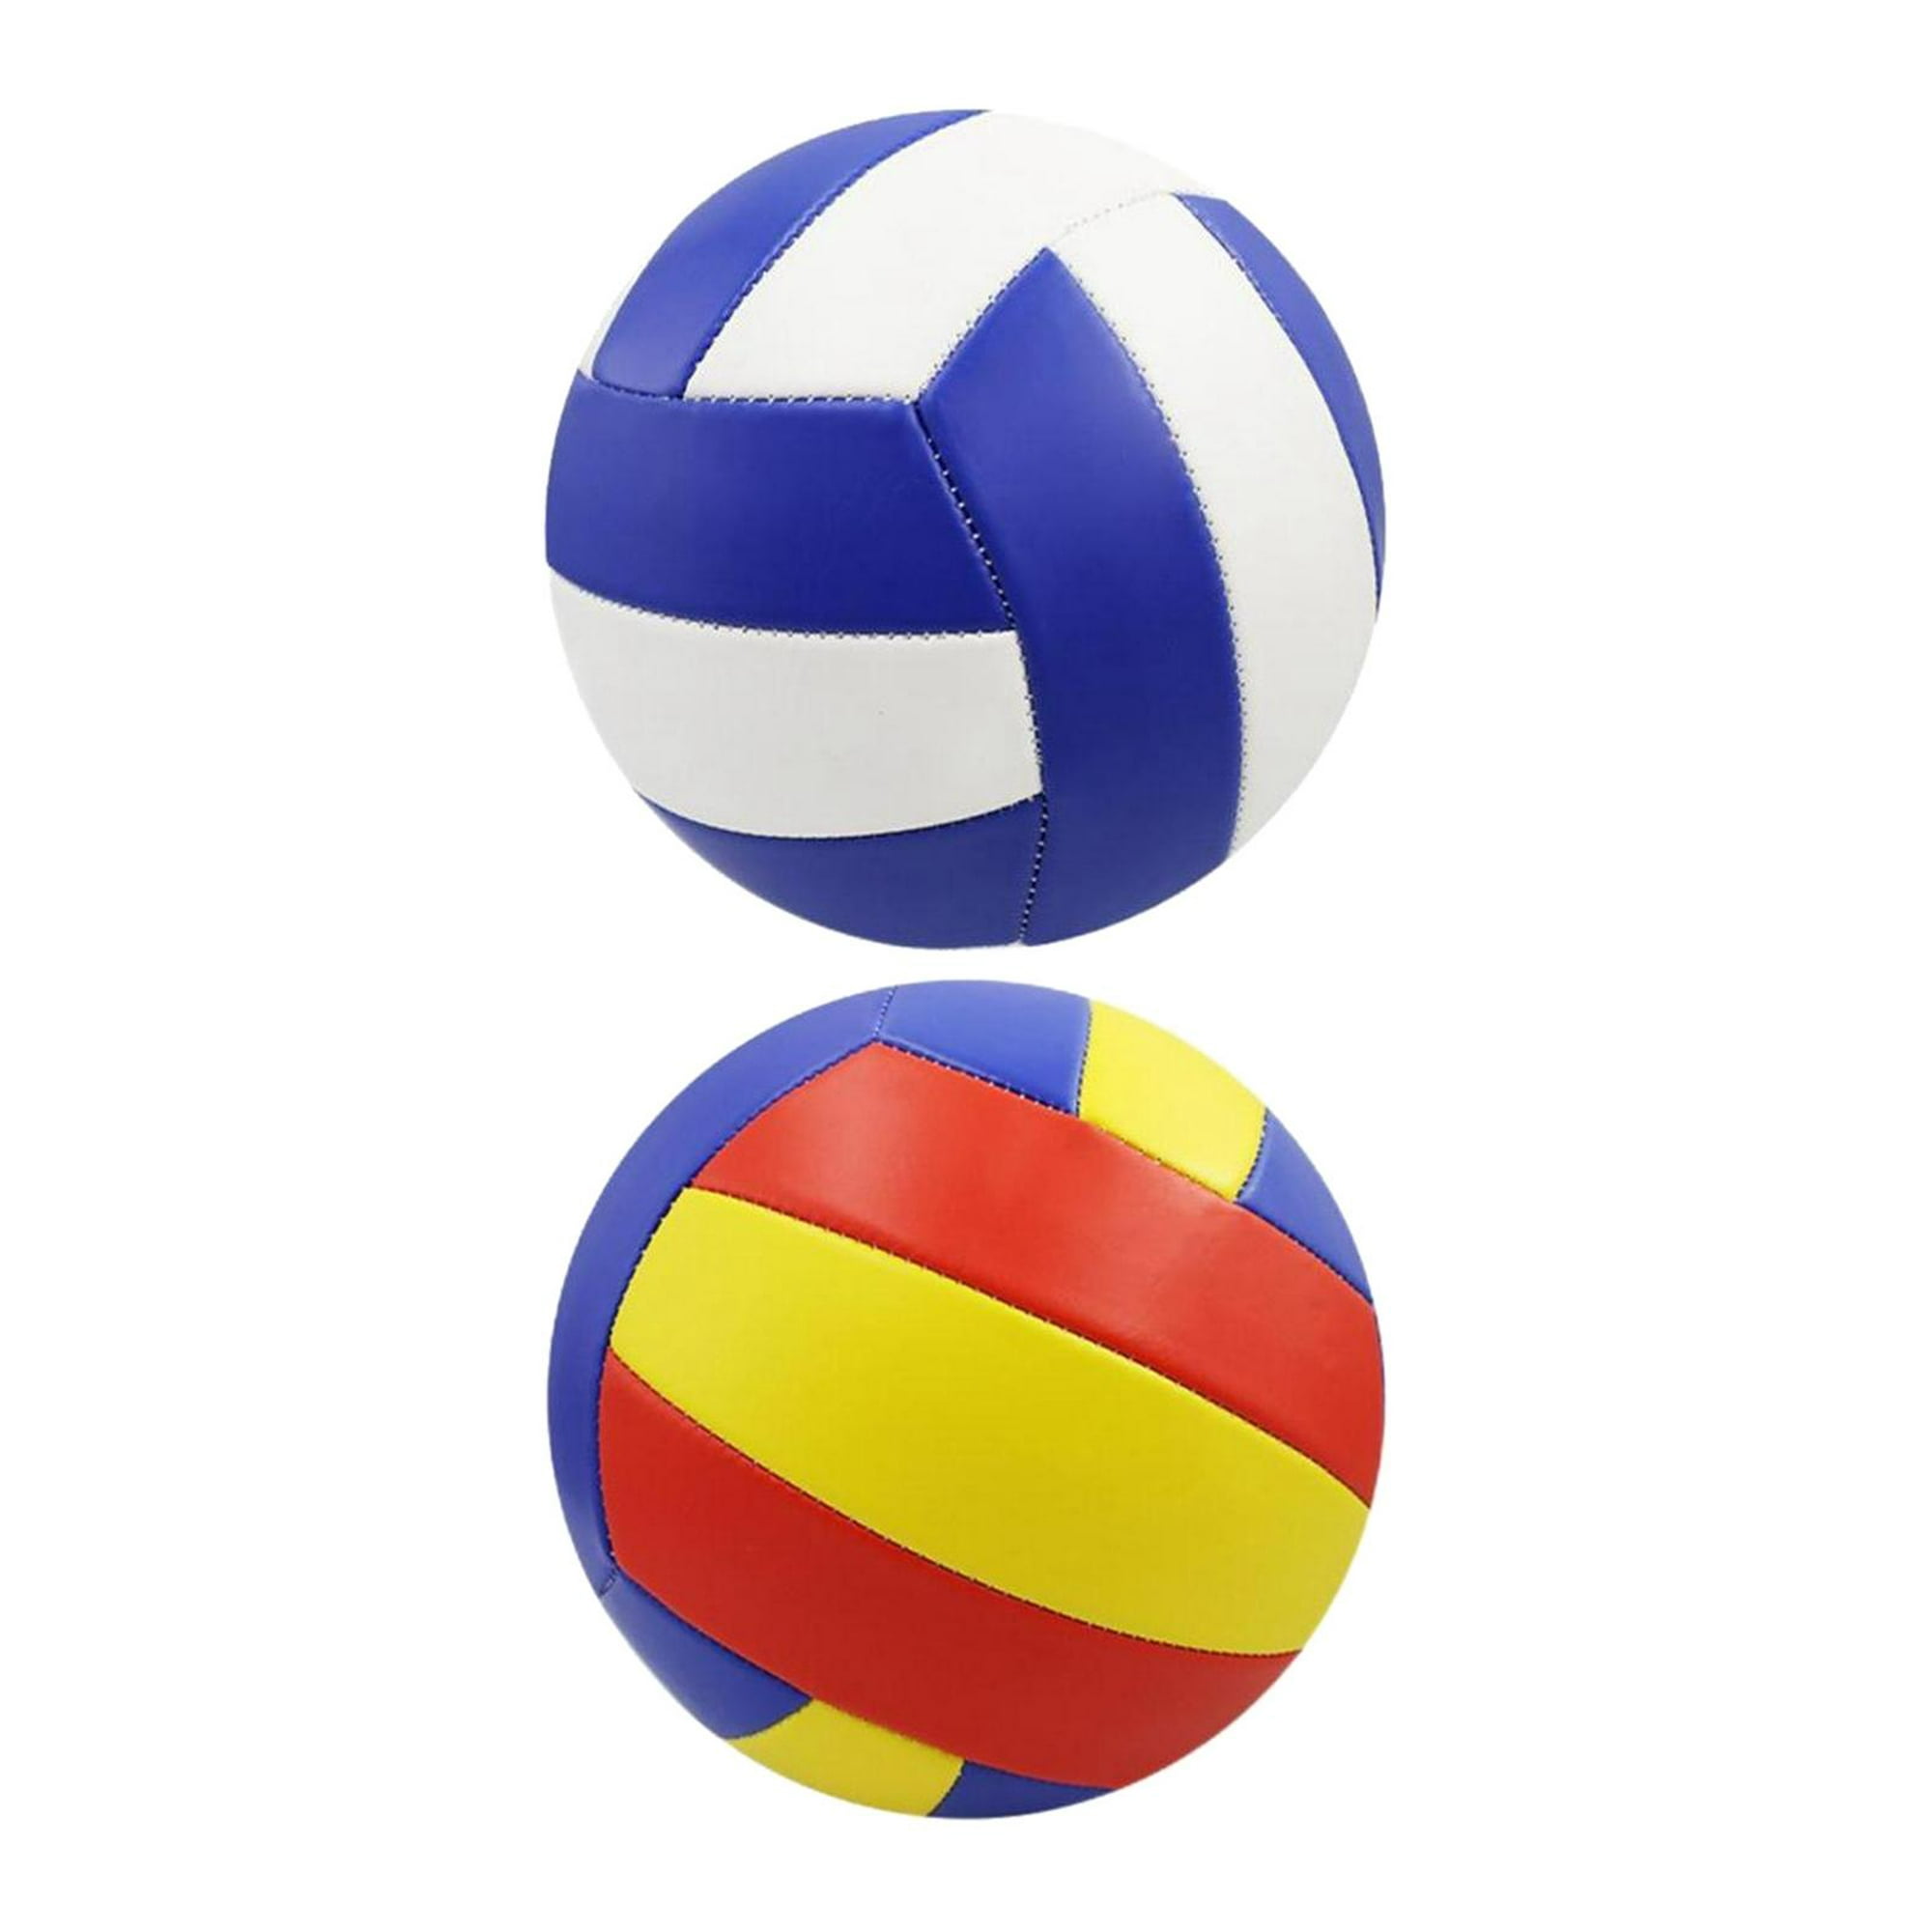 Juego de 6 pelotas deportivas multideportivas, tamaño oficial, fútbol,  voleibol, pelota de juegos infantiles, béisbol con bolsa de equipo  deportivo